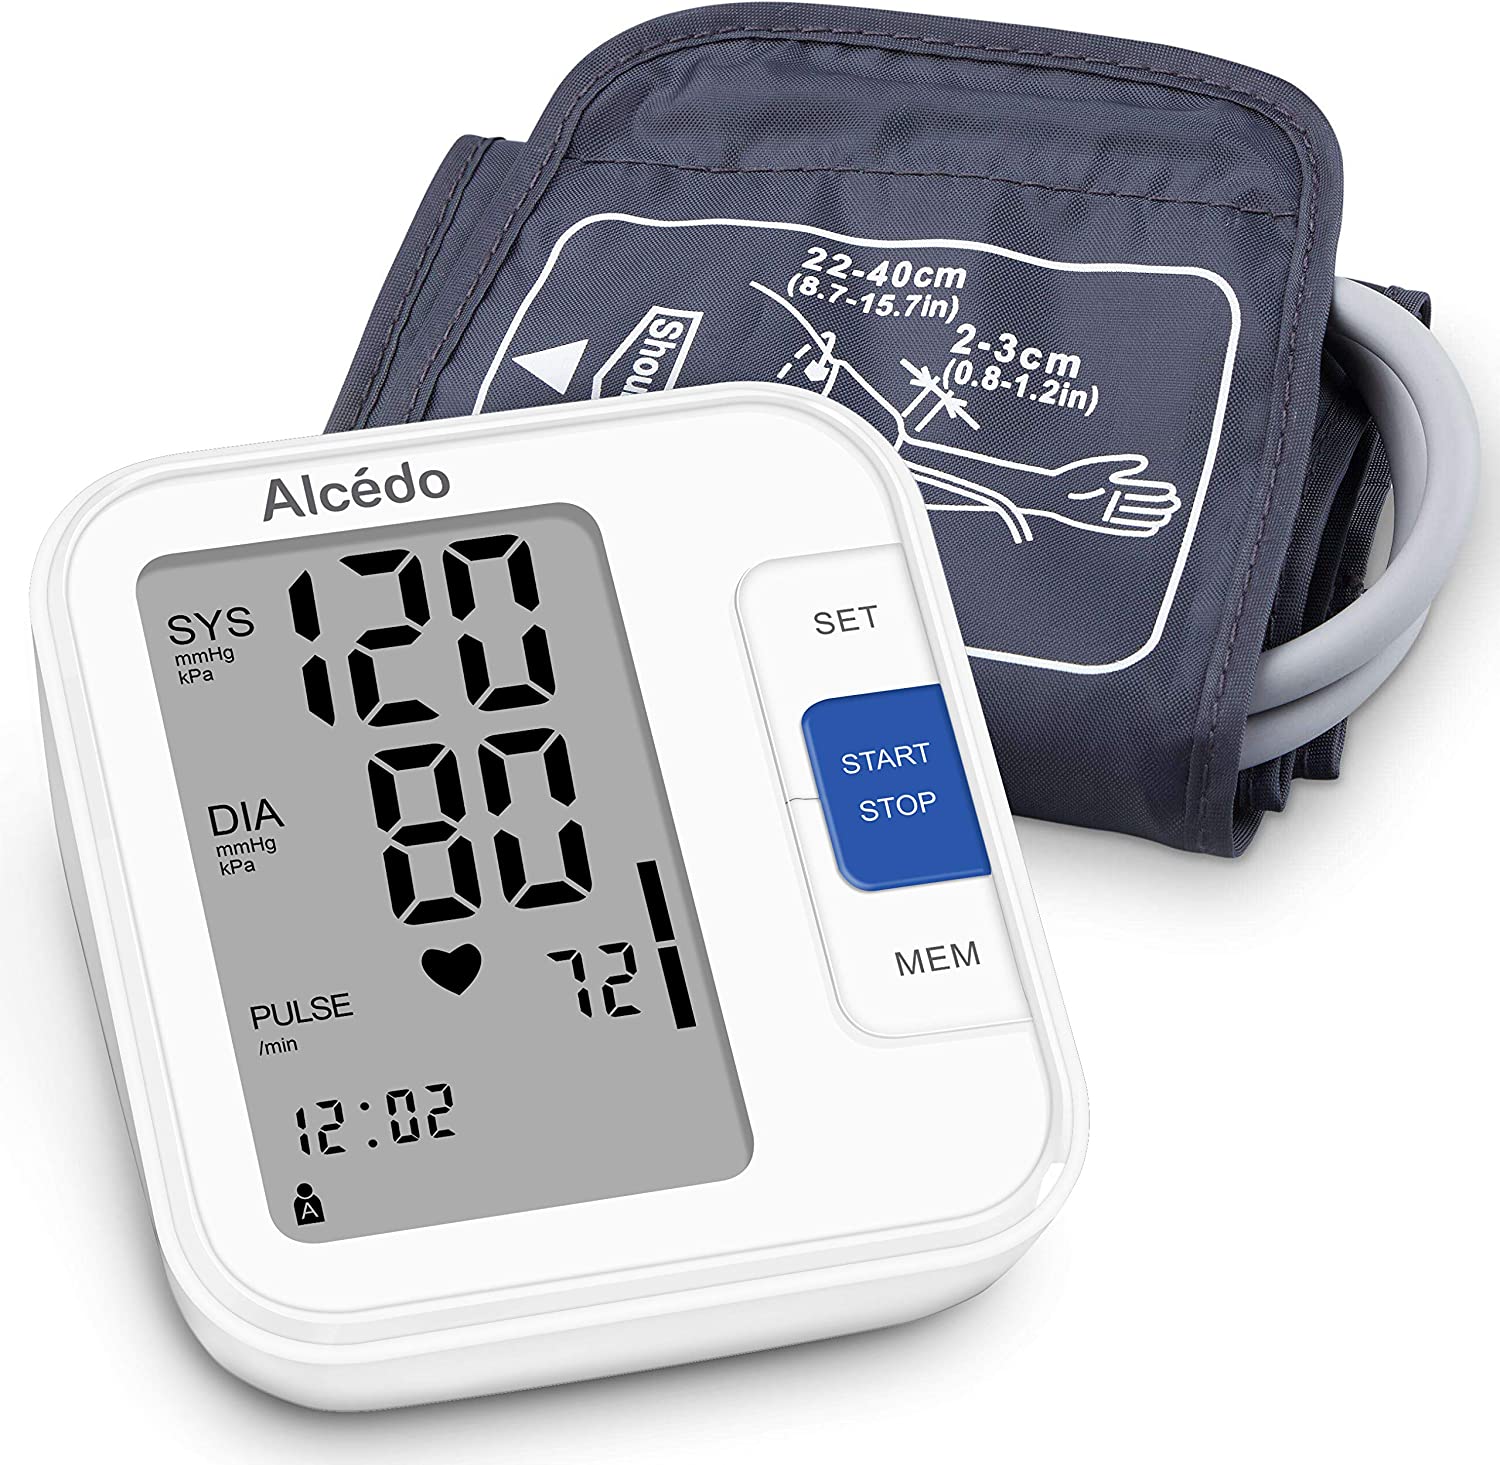 https://www.dontwasteyourmoney.com/wp-content/uploads/2020/07/alcedo-upper-arm-wide-range-cuff-talking-blood-pressure-monitor.jpg